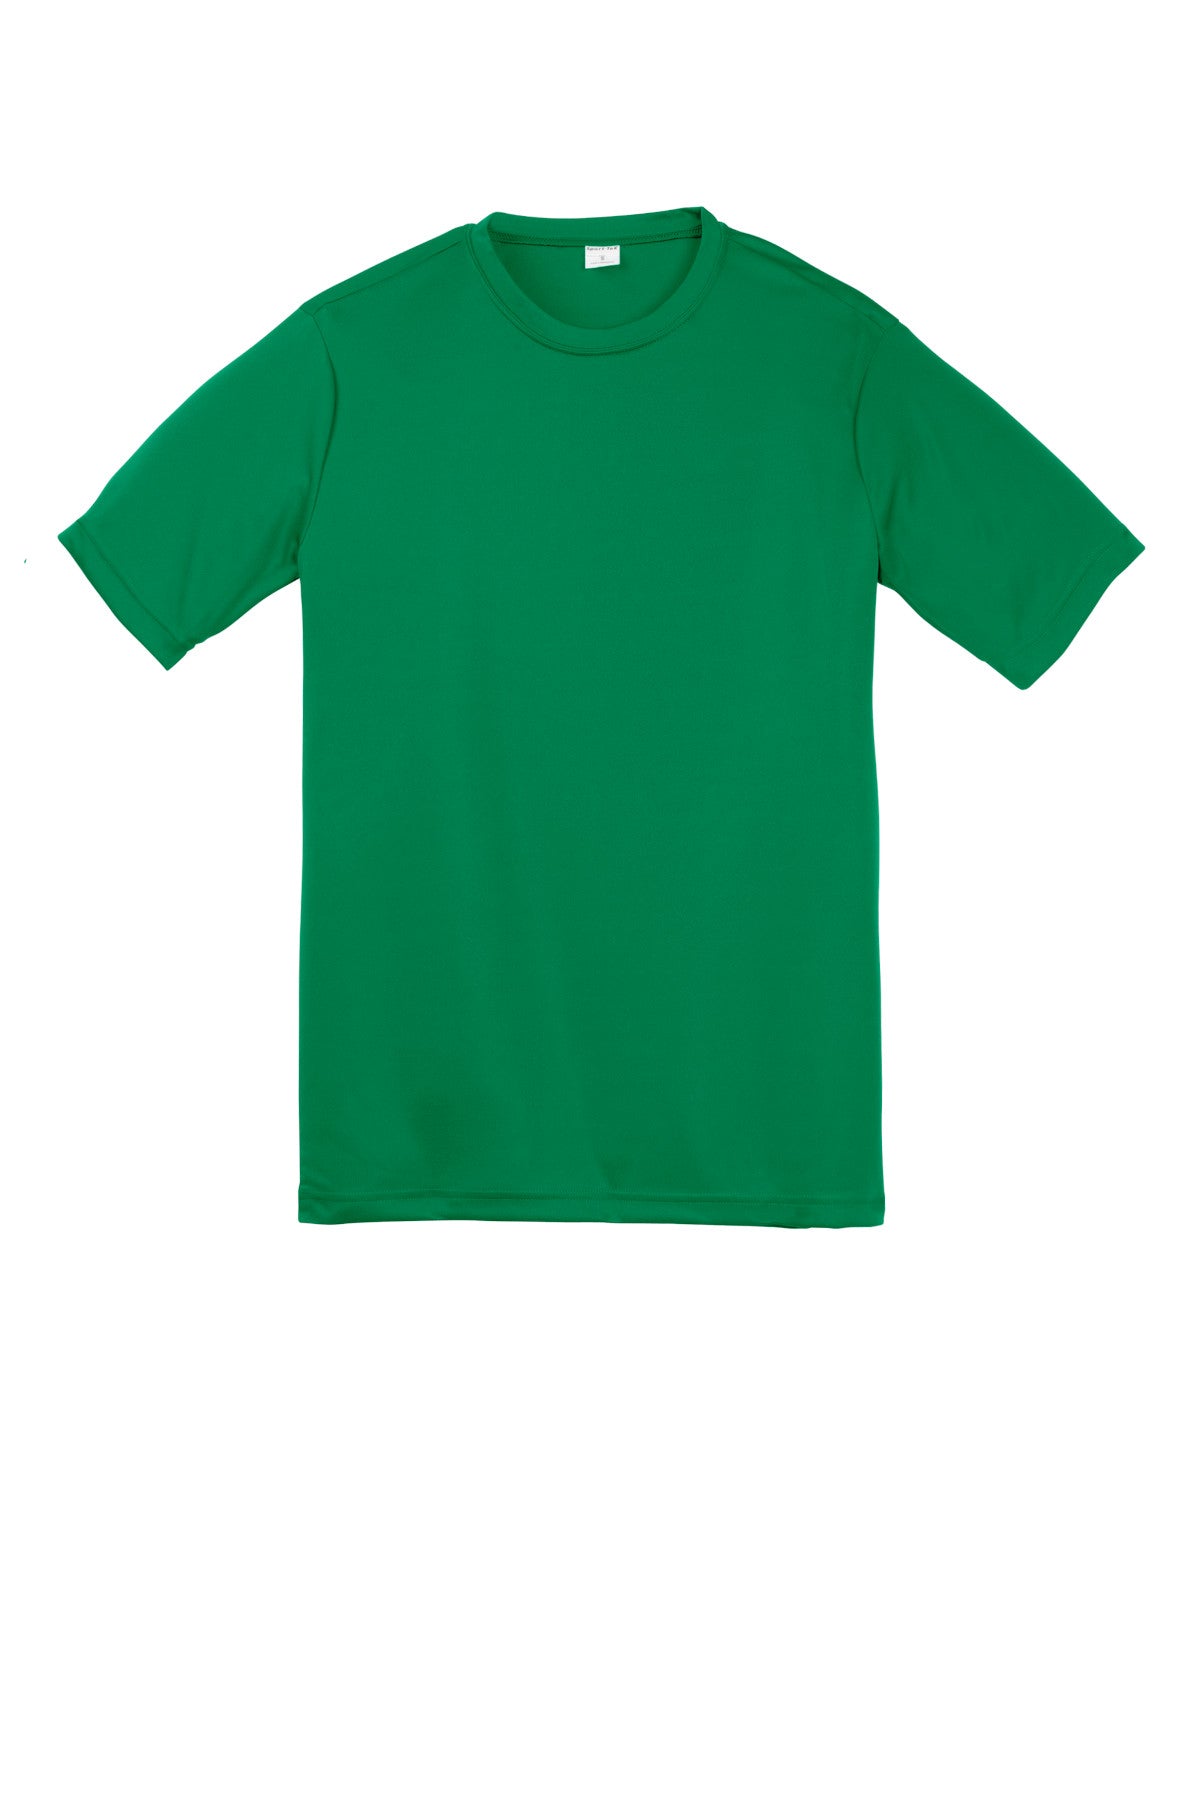 Sport-Tek Yst350 Polyester Youth T-Shirt Yth Small / Kelly Green